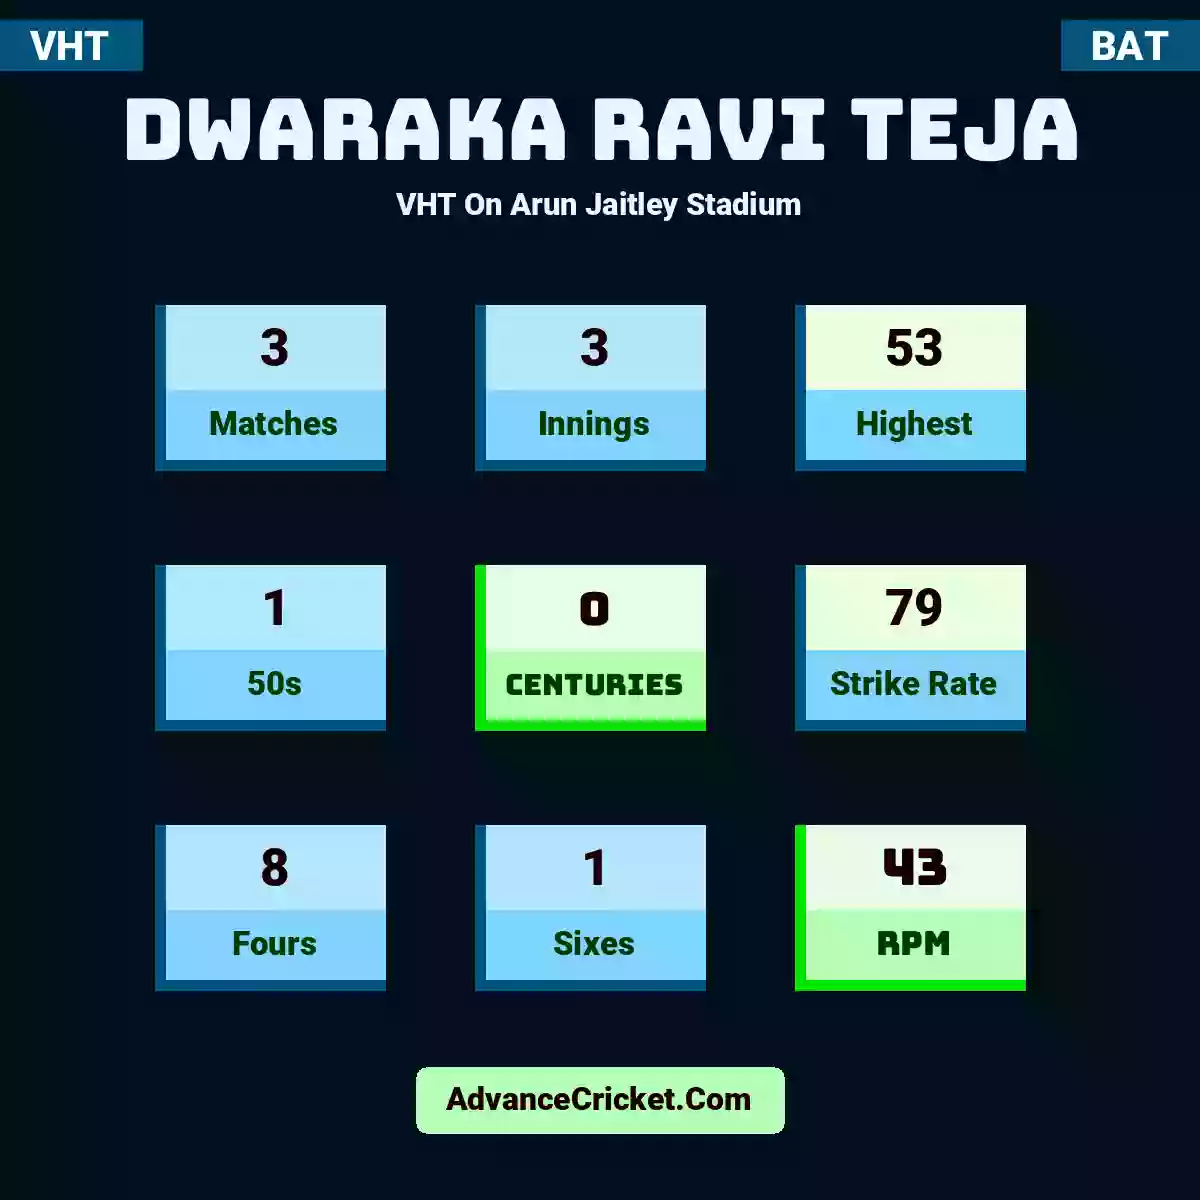 Dwaraka Ravi Teja VHT  On Arun Jaitley Stadium, Dwaraka Ravi Teja played 3 matches, scored 53 runs as highest, 1 half-centuries, and 0 centuries, with a strike rate of 79. D.Teja hit 8 fours and 1 sixes, with an RPM of 43.